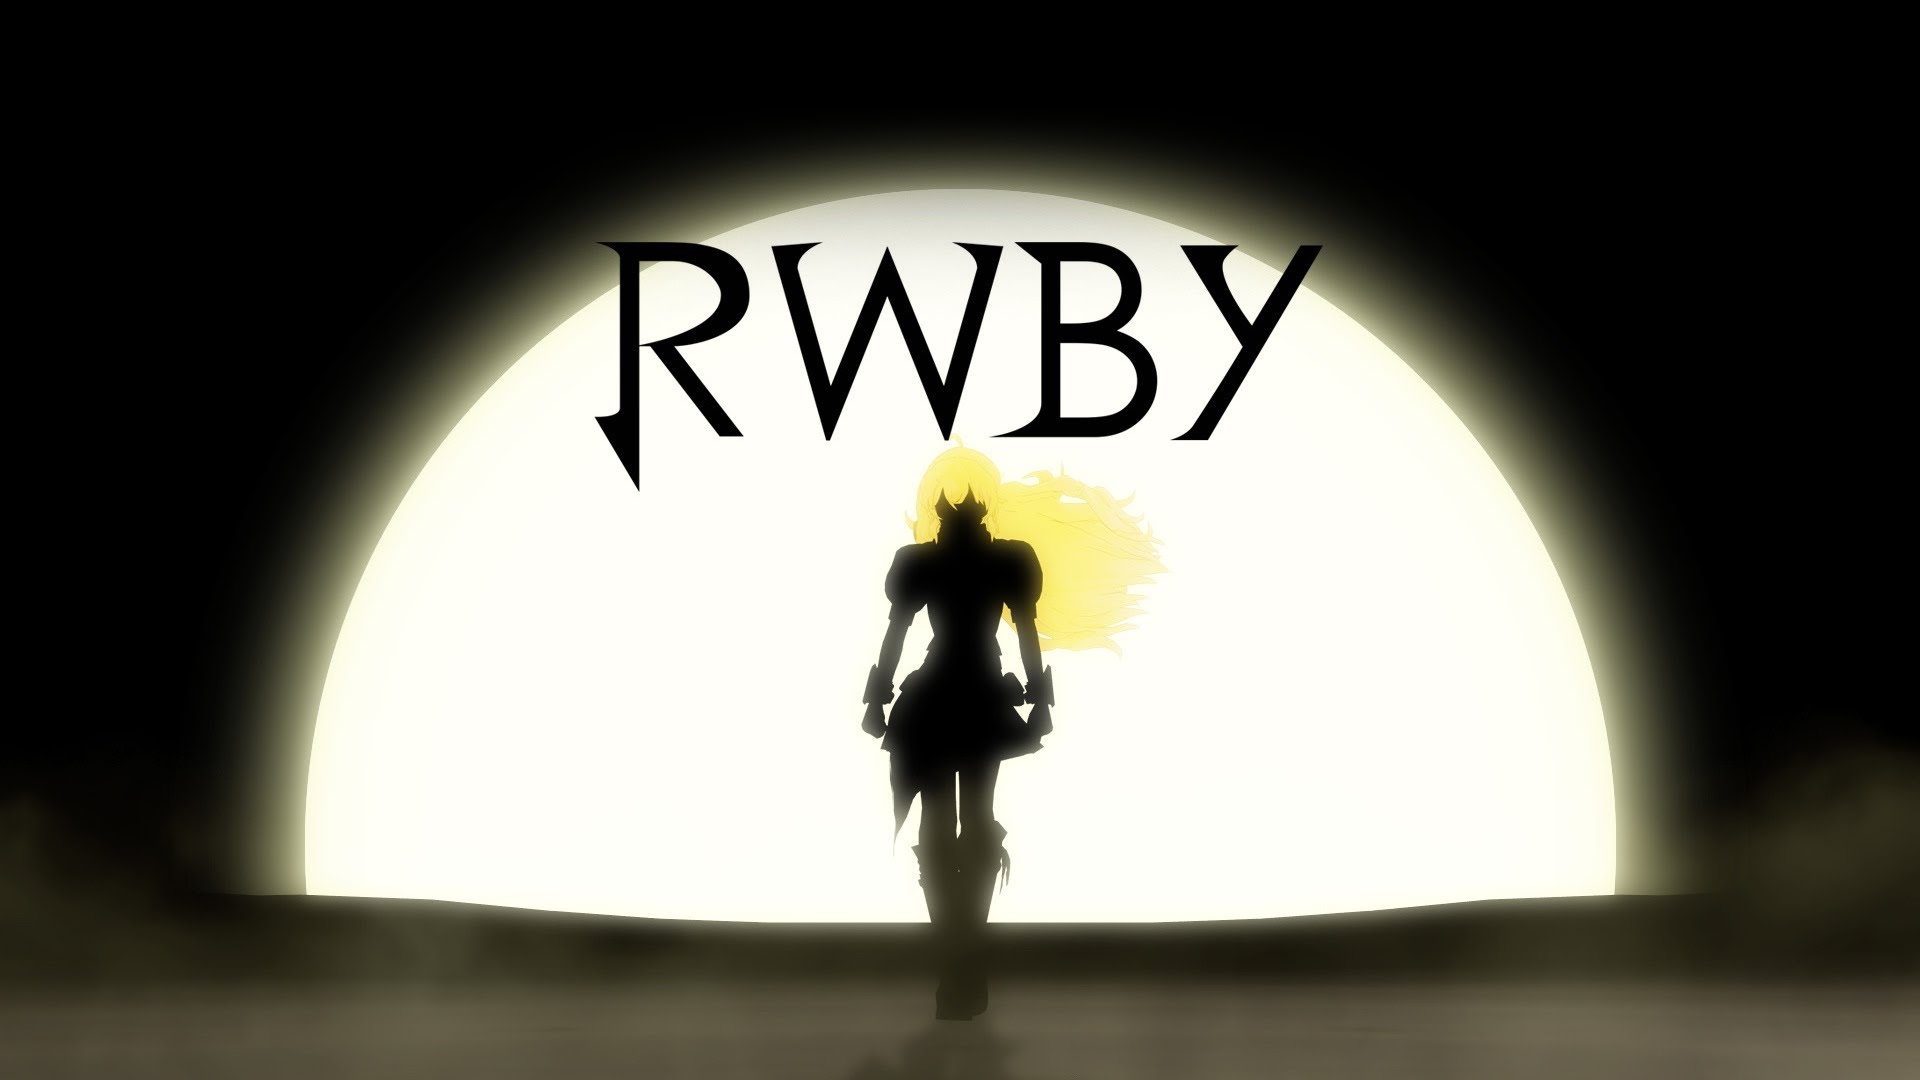 Ruby Rose Rwby 1080p Wallpaper Image Thecelebritypix